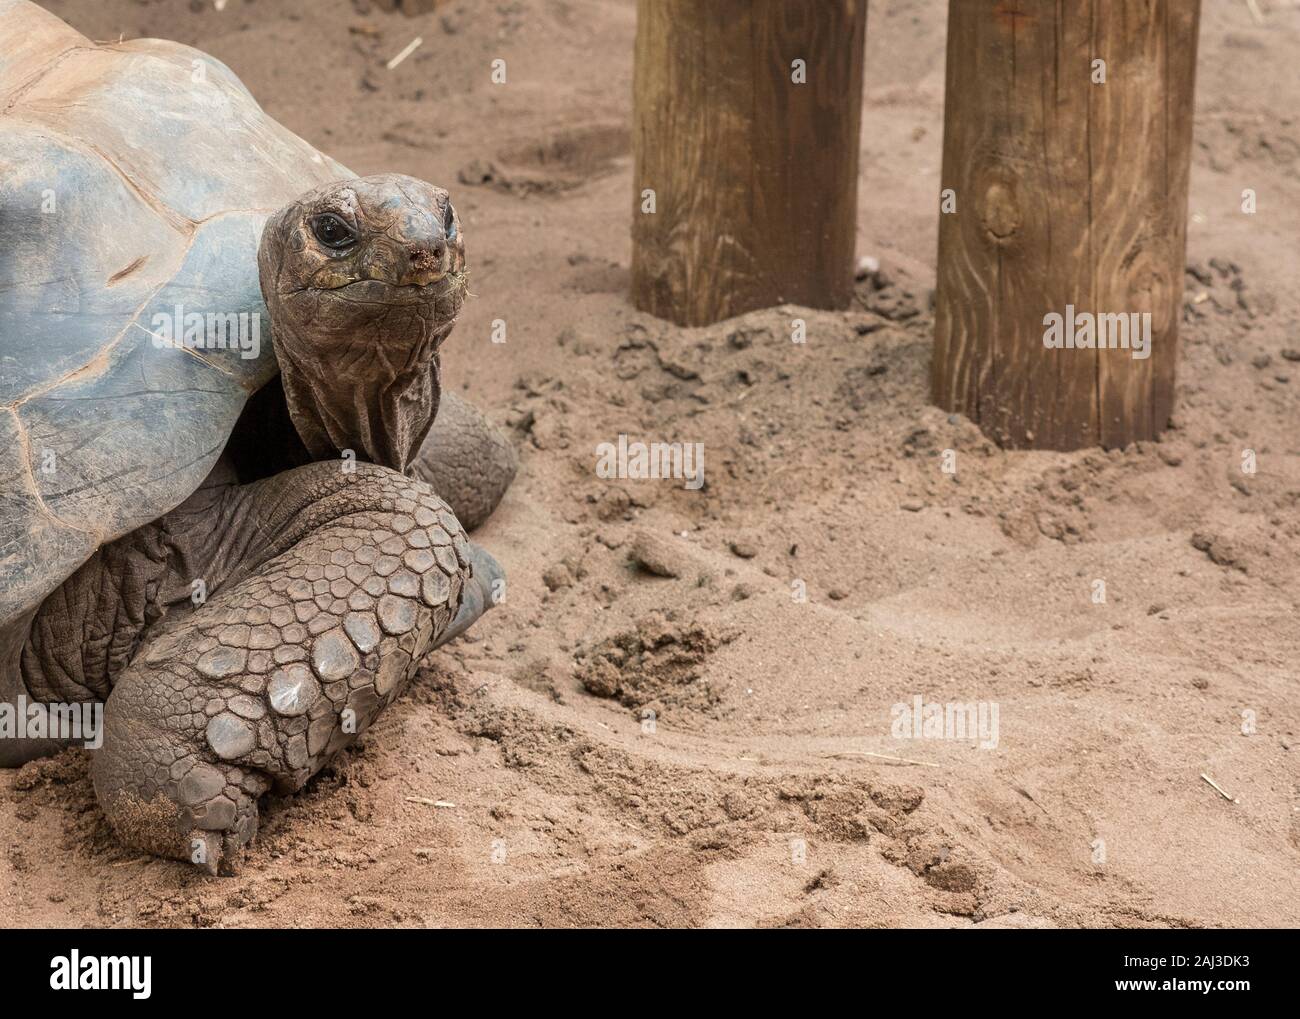 Big old tortoise on sand Stock Photo